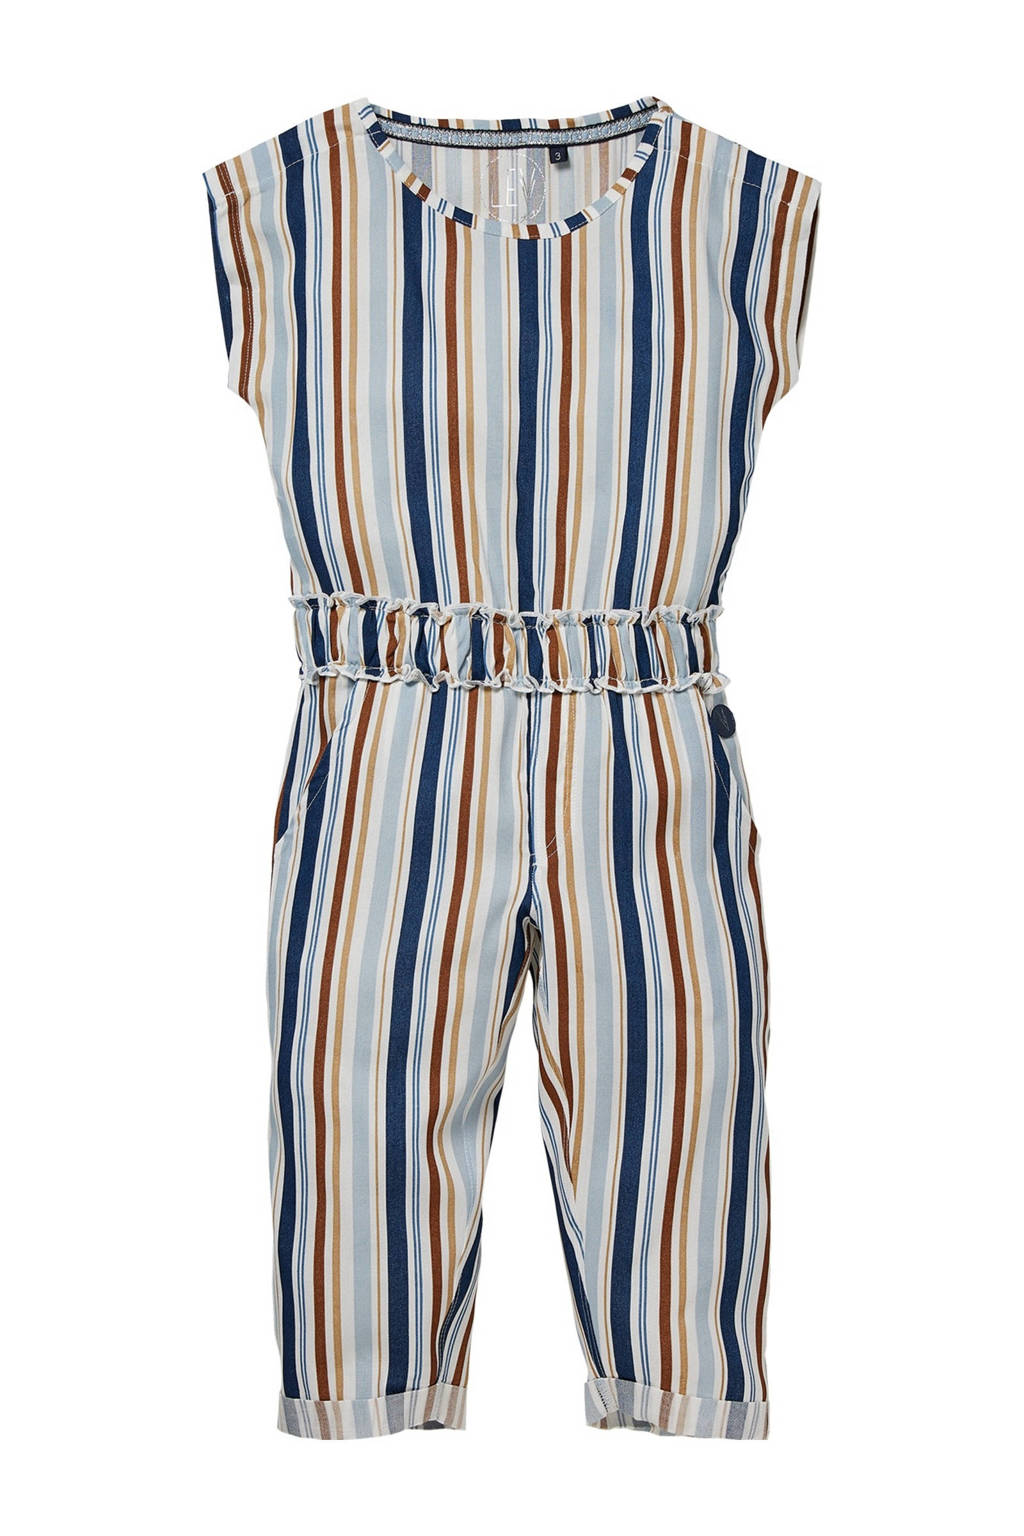 LEVV Little gestreepte jumpsuit Nella lichtblauw/multicolor, Lichtblauw/multicolor